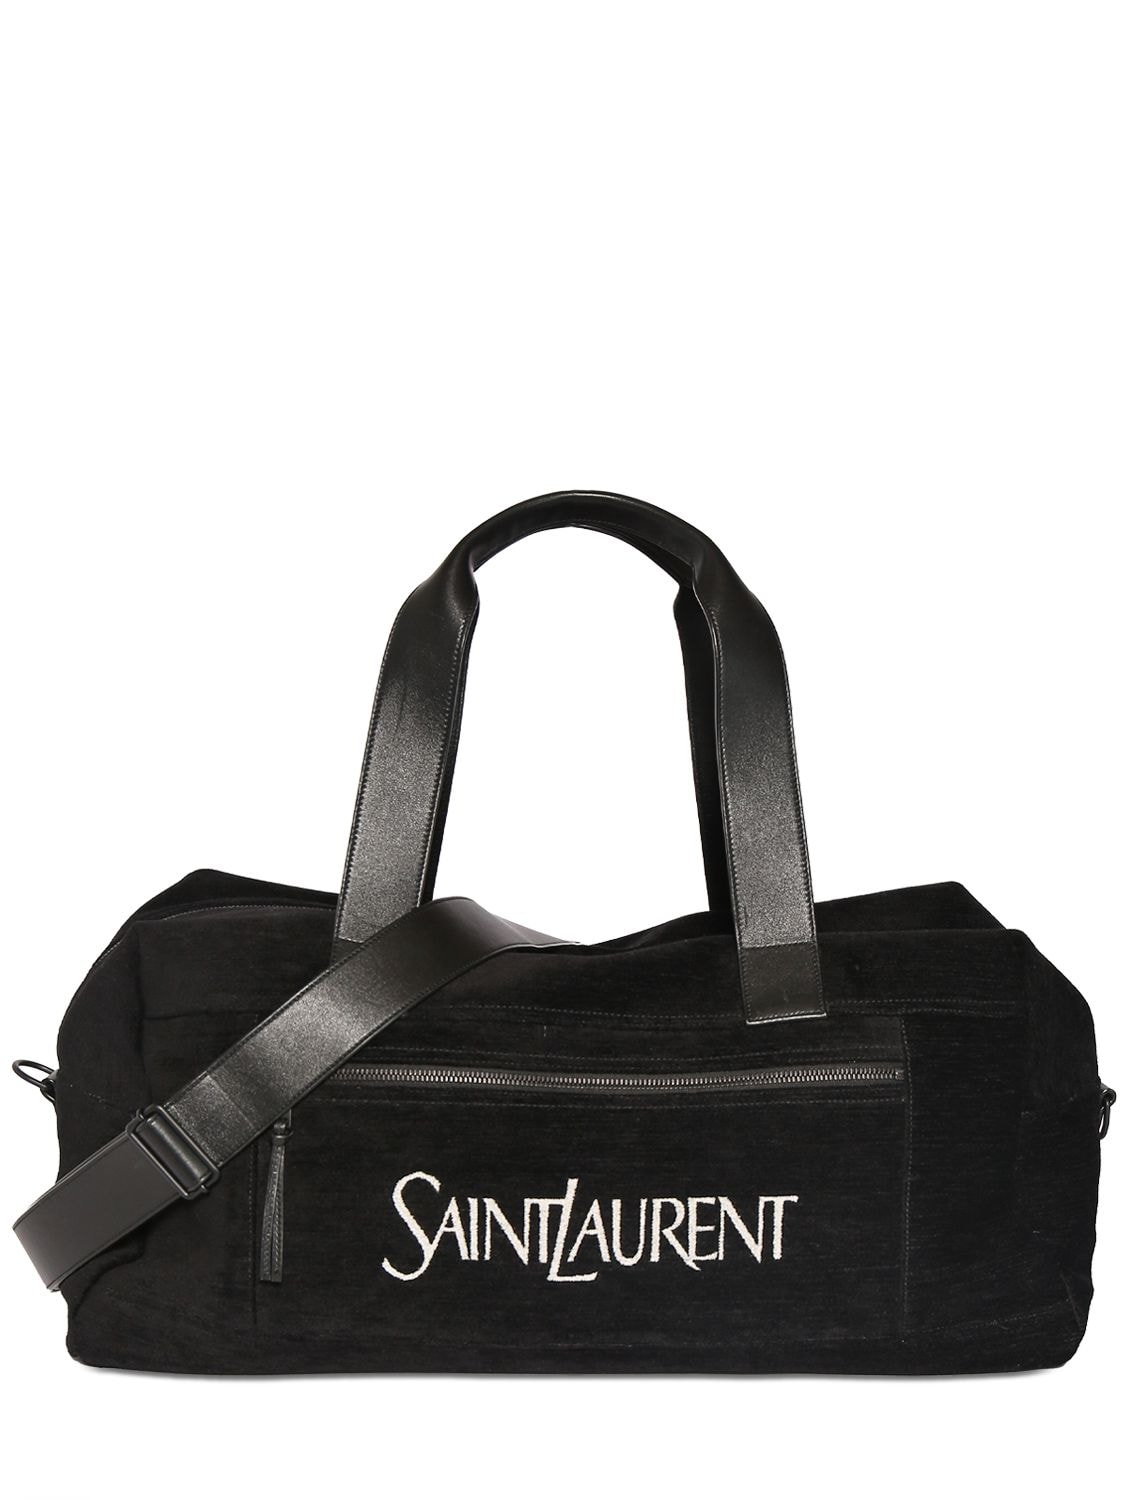 Image of Saint Laurent Leather Duffle Bag